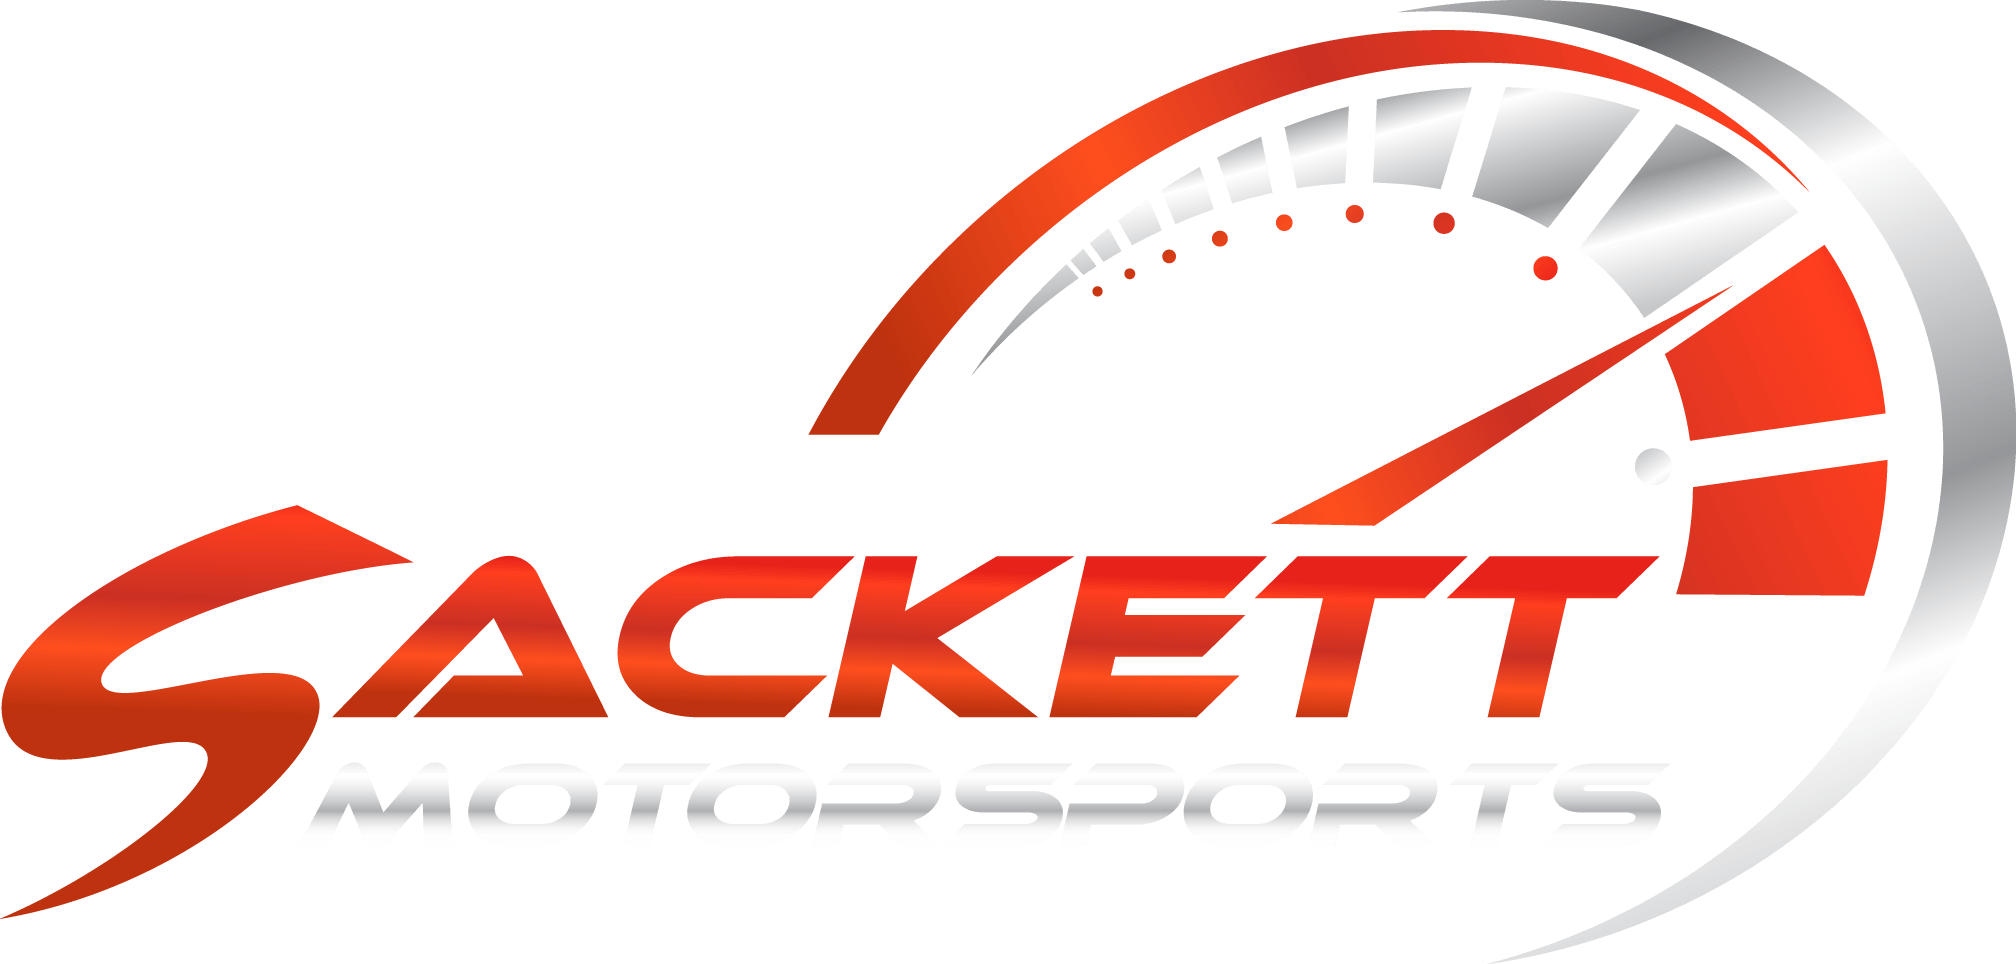 Sackett Motorsports, Inc